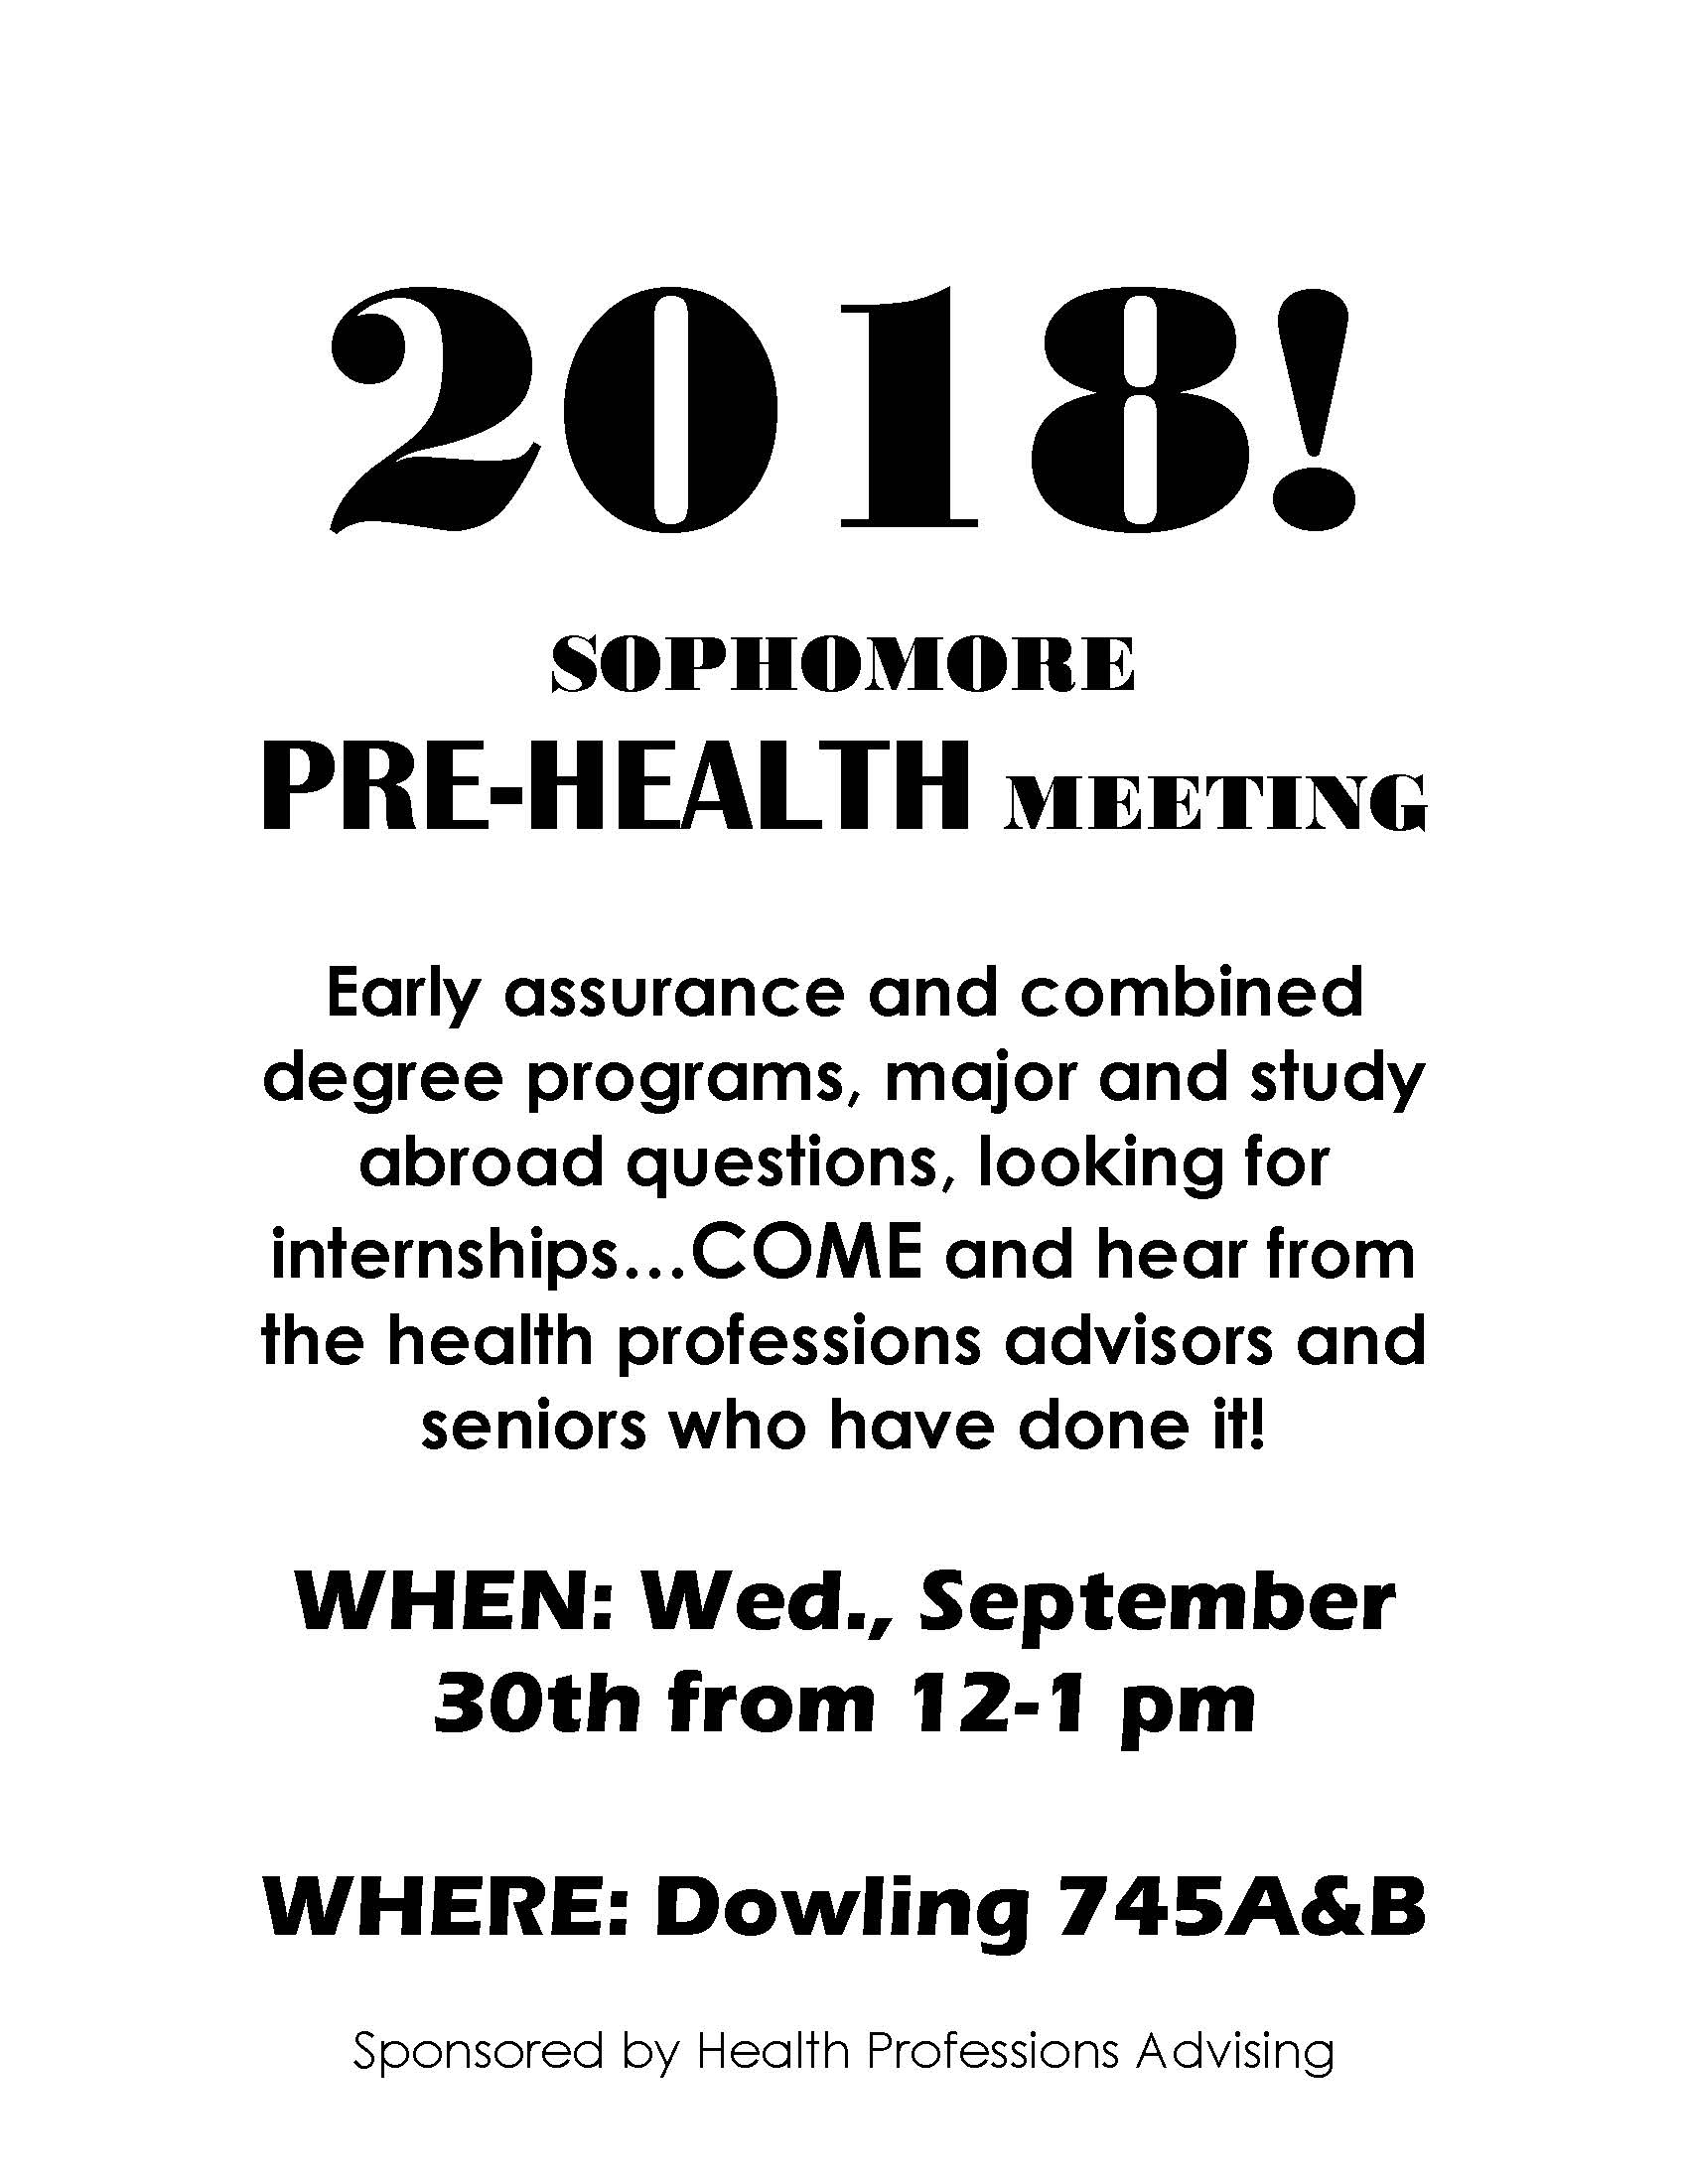 Sophomore pre-health meeting flyer